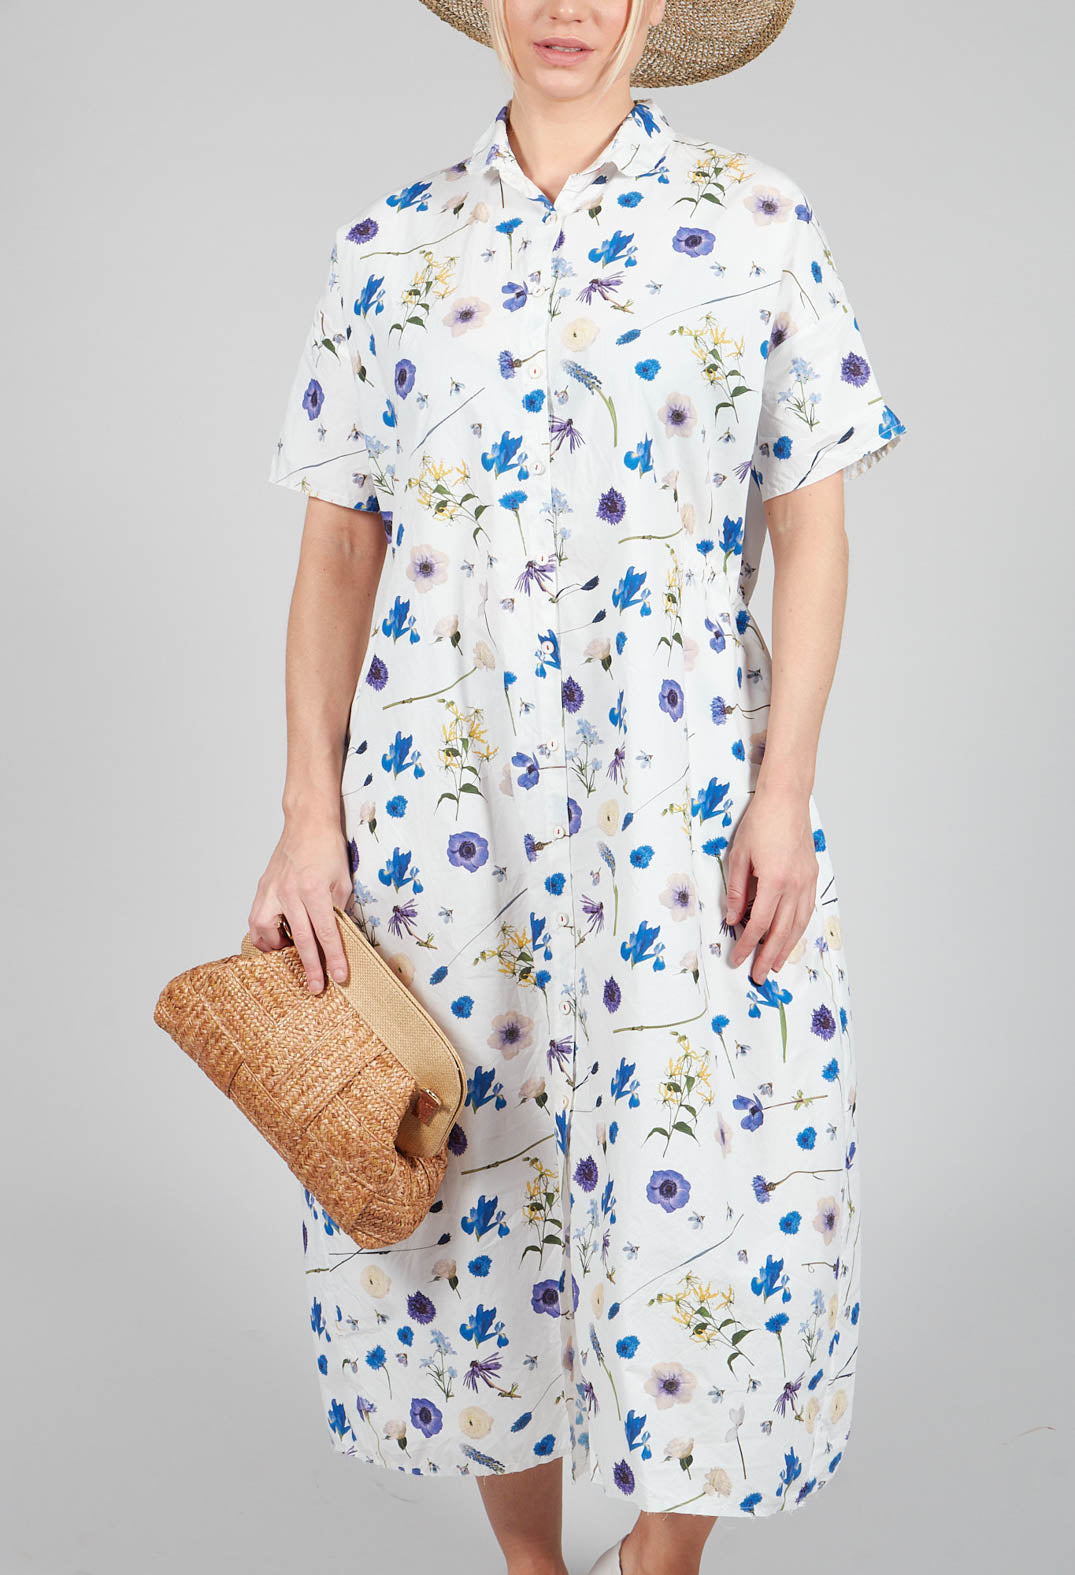 Reana Dress in Blue Flower Print